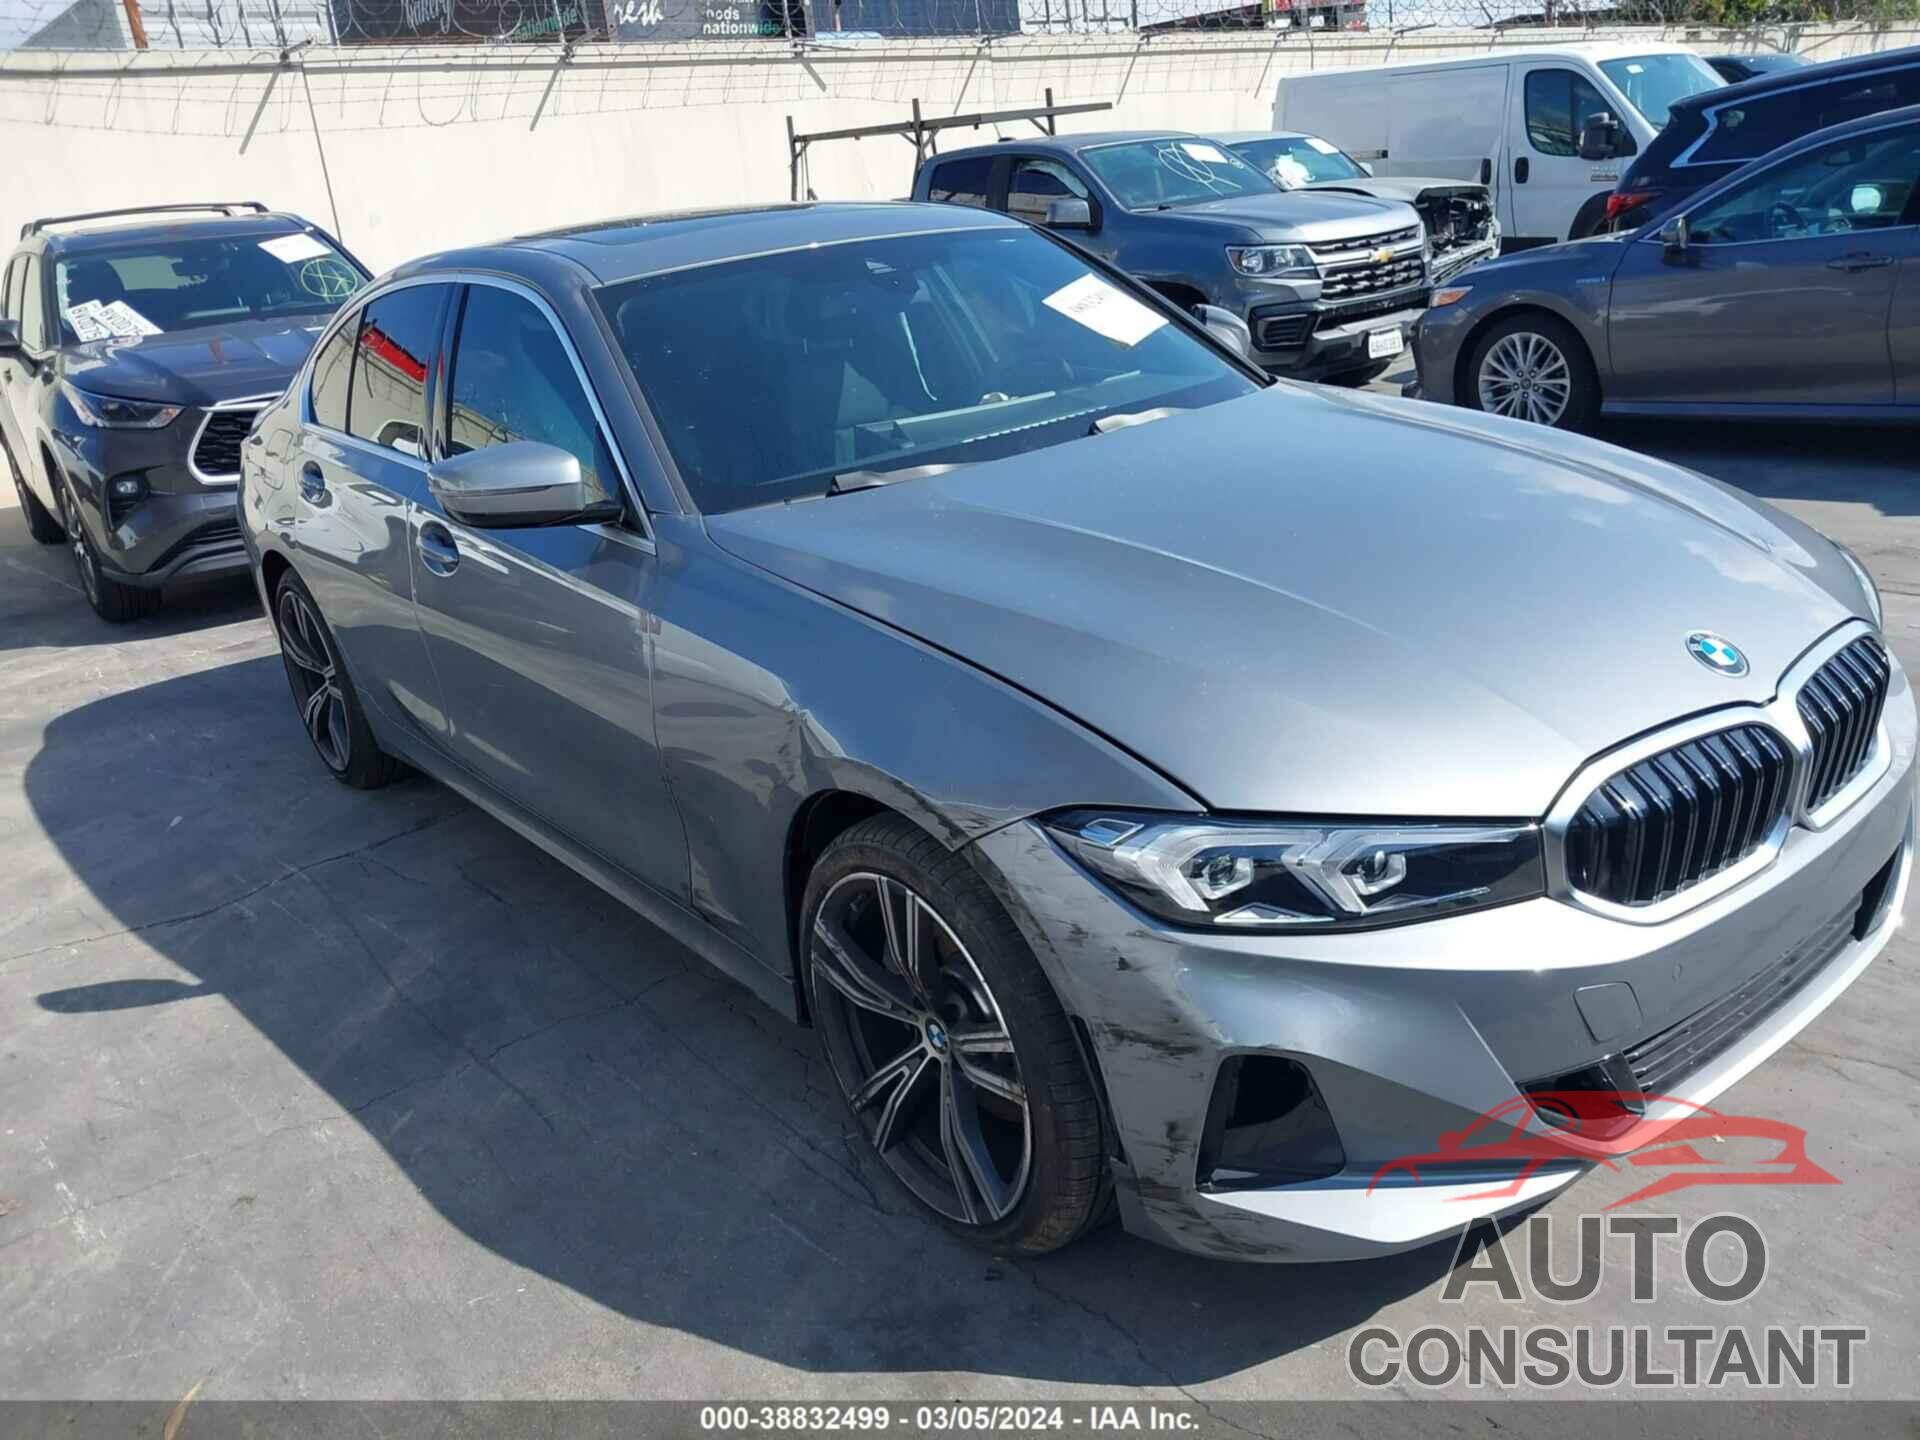 BMW 3 SERIES 2024 - 3MW69FF09R8D88436